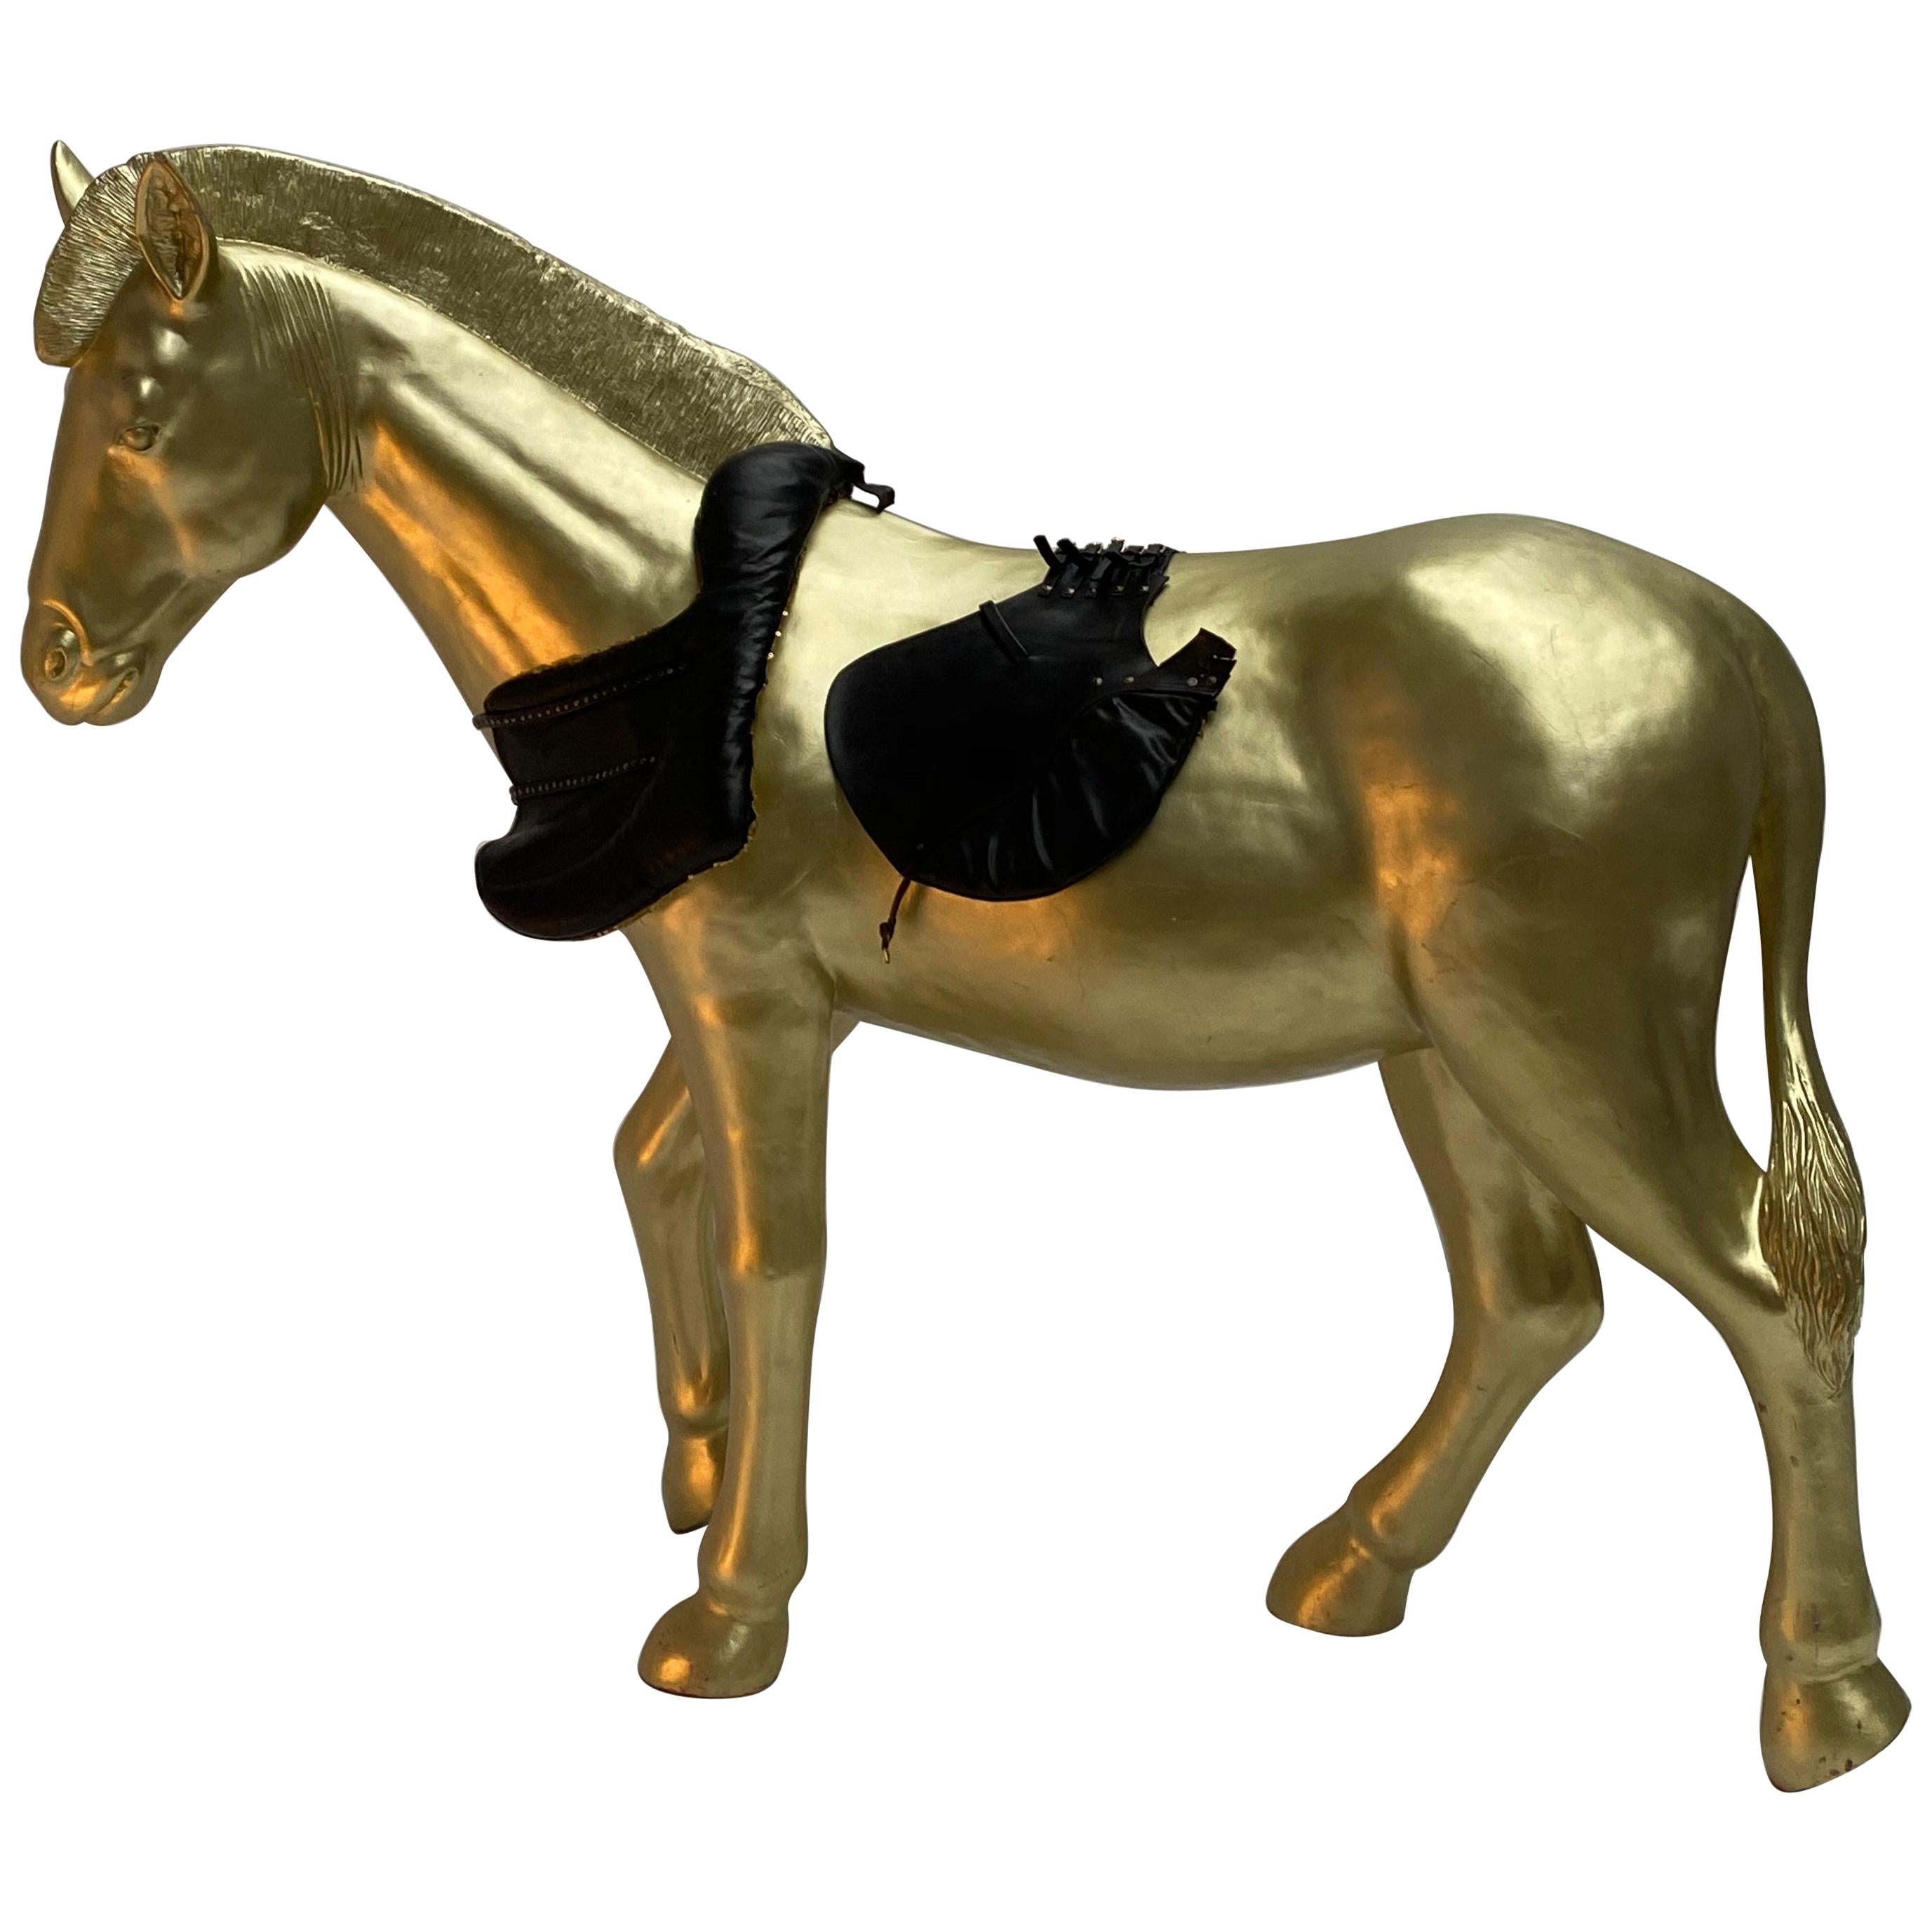 Real Sized Golden Horse by Lingerie Designer Marlies Dekkers, the Netherlands